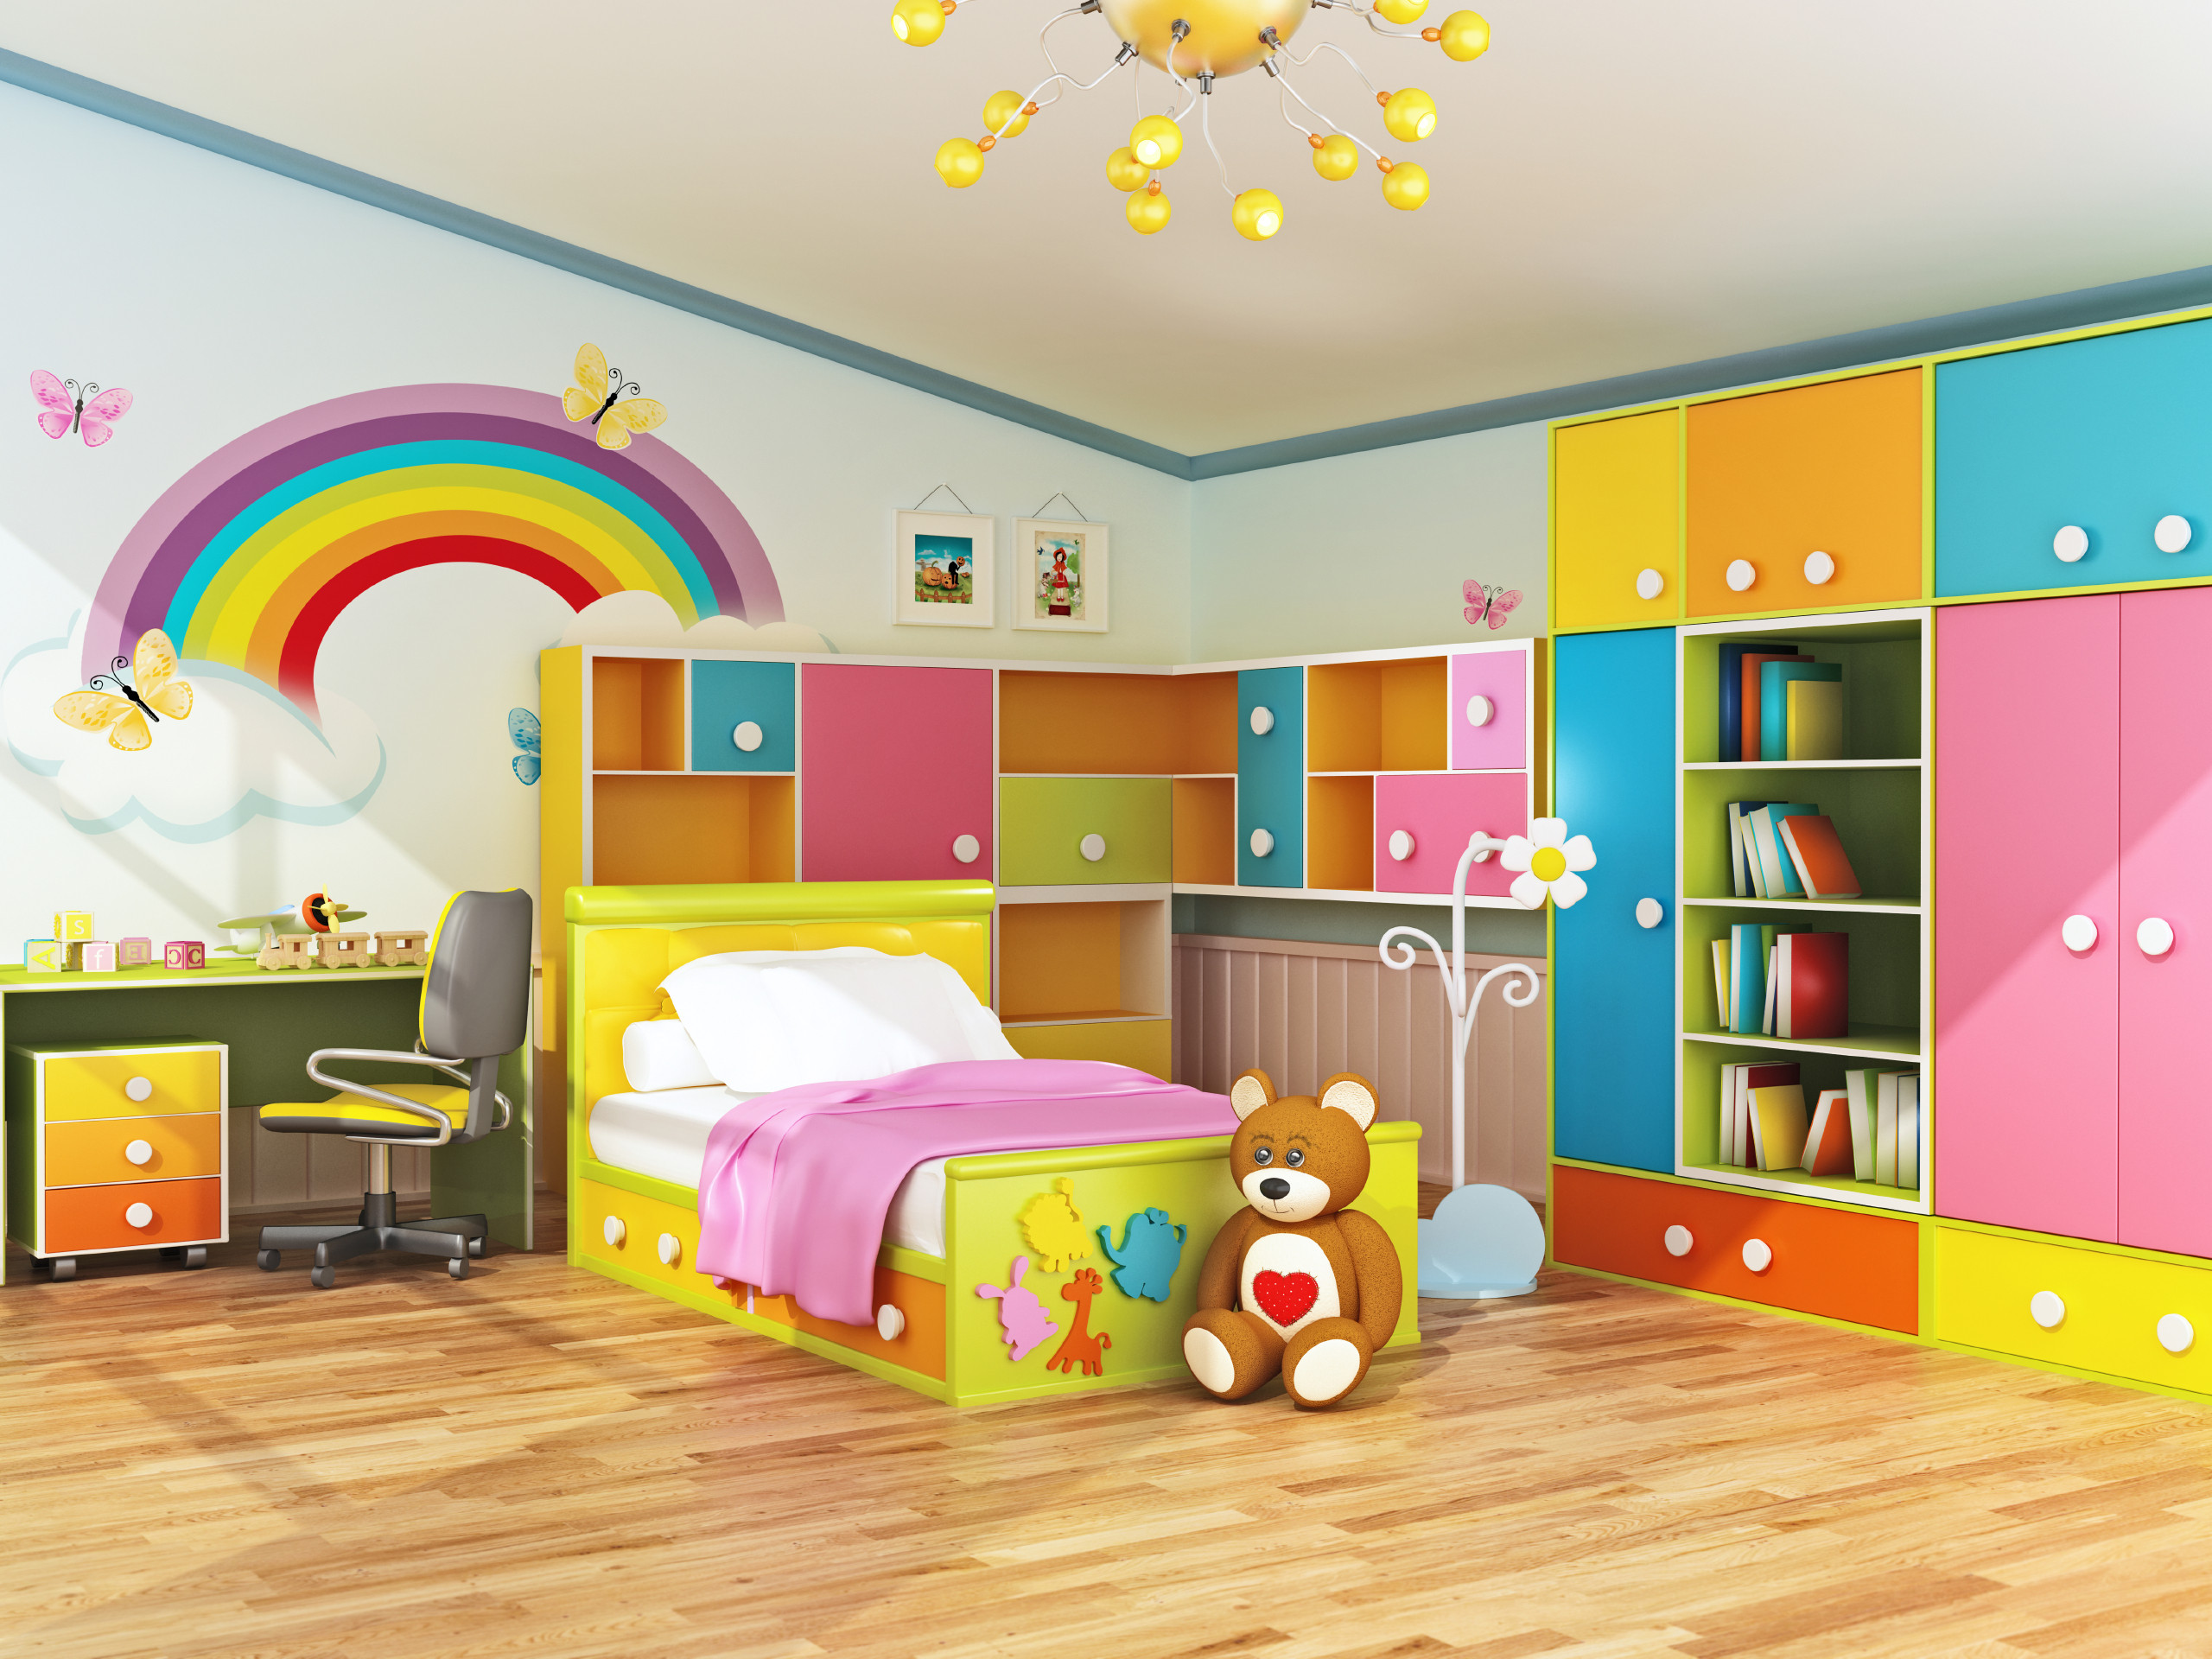 Kids Room Inspiration
 Plan Ahead When Decorating Kids Bedrooms